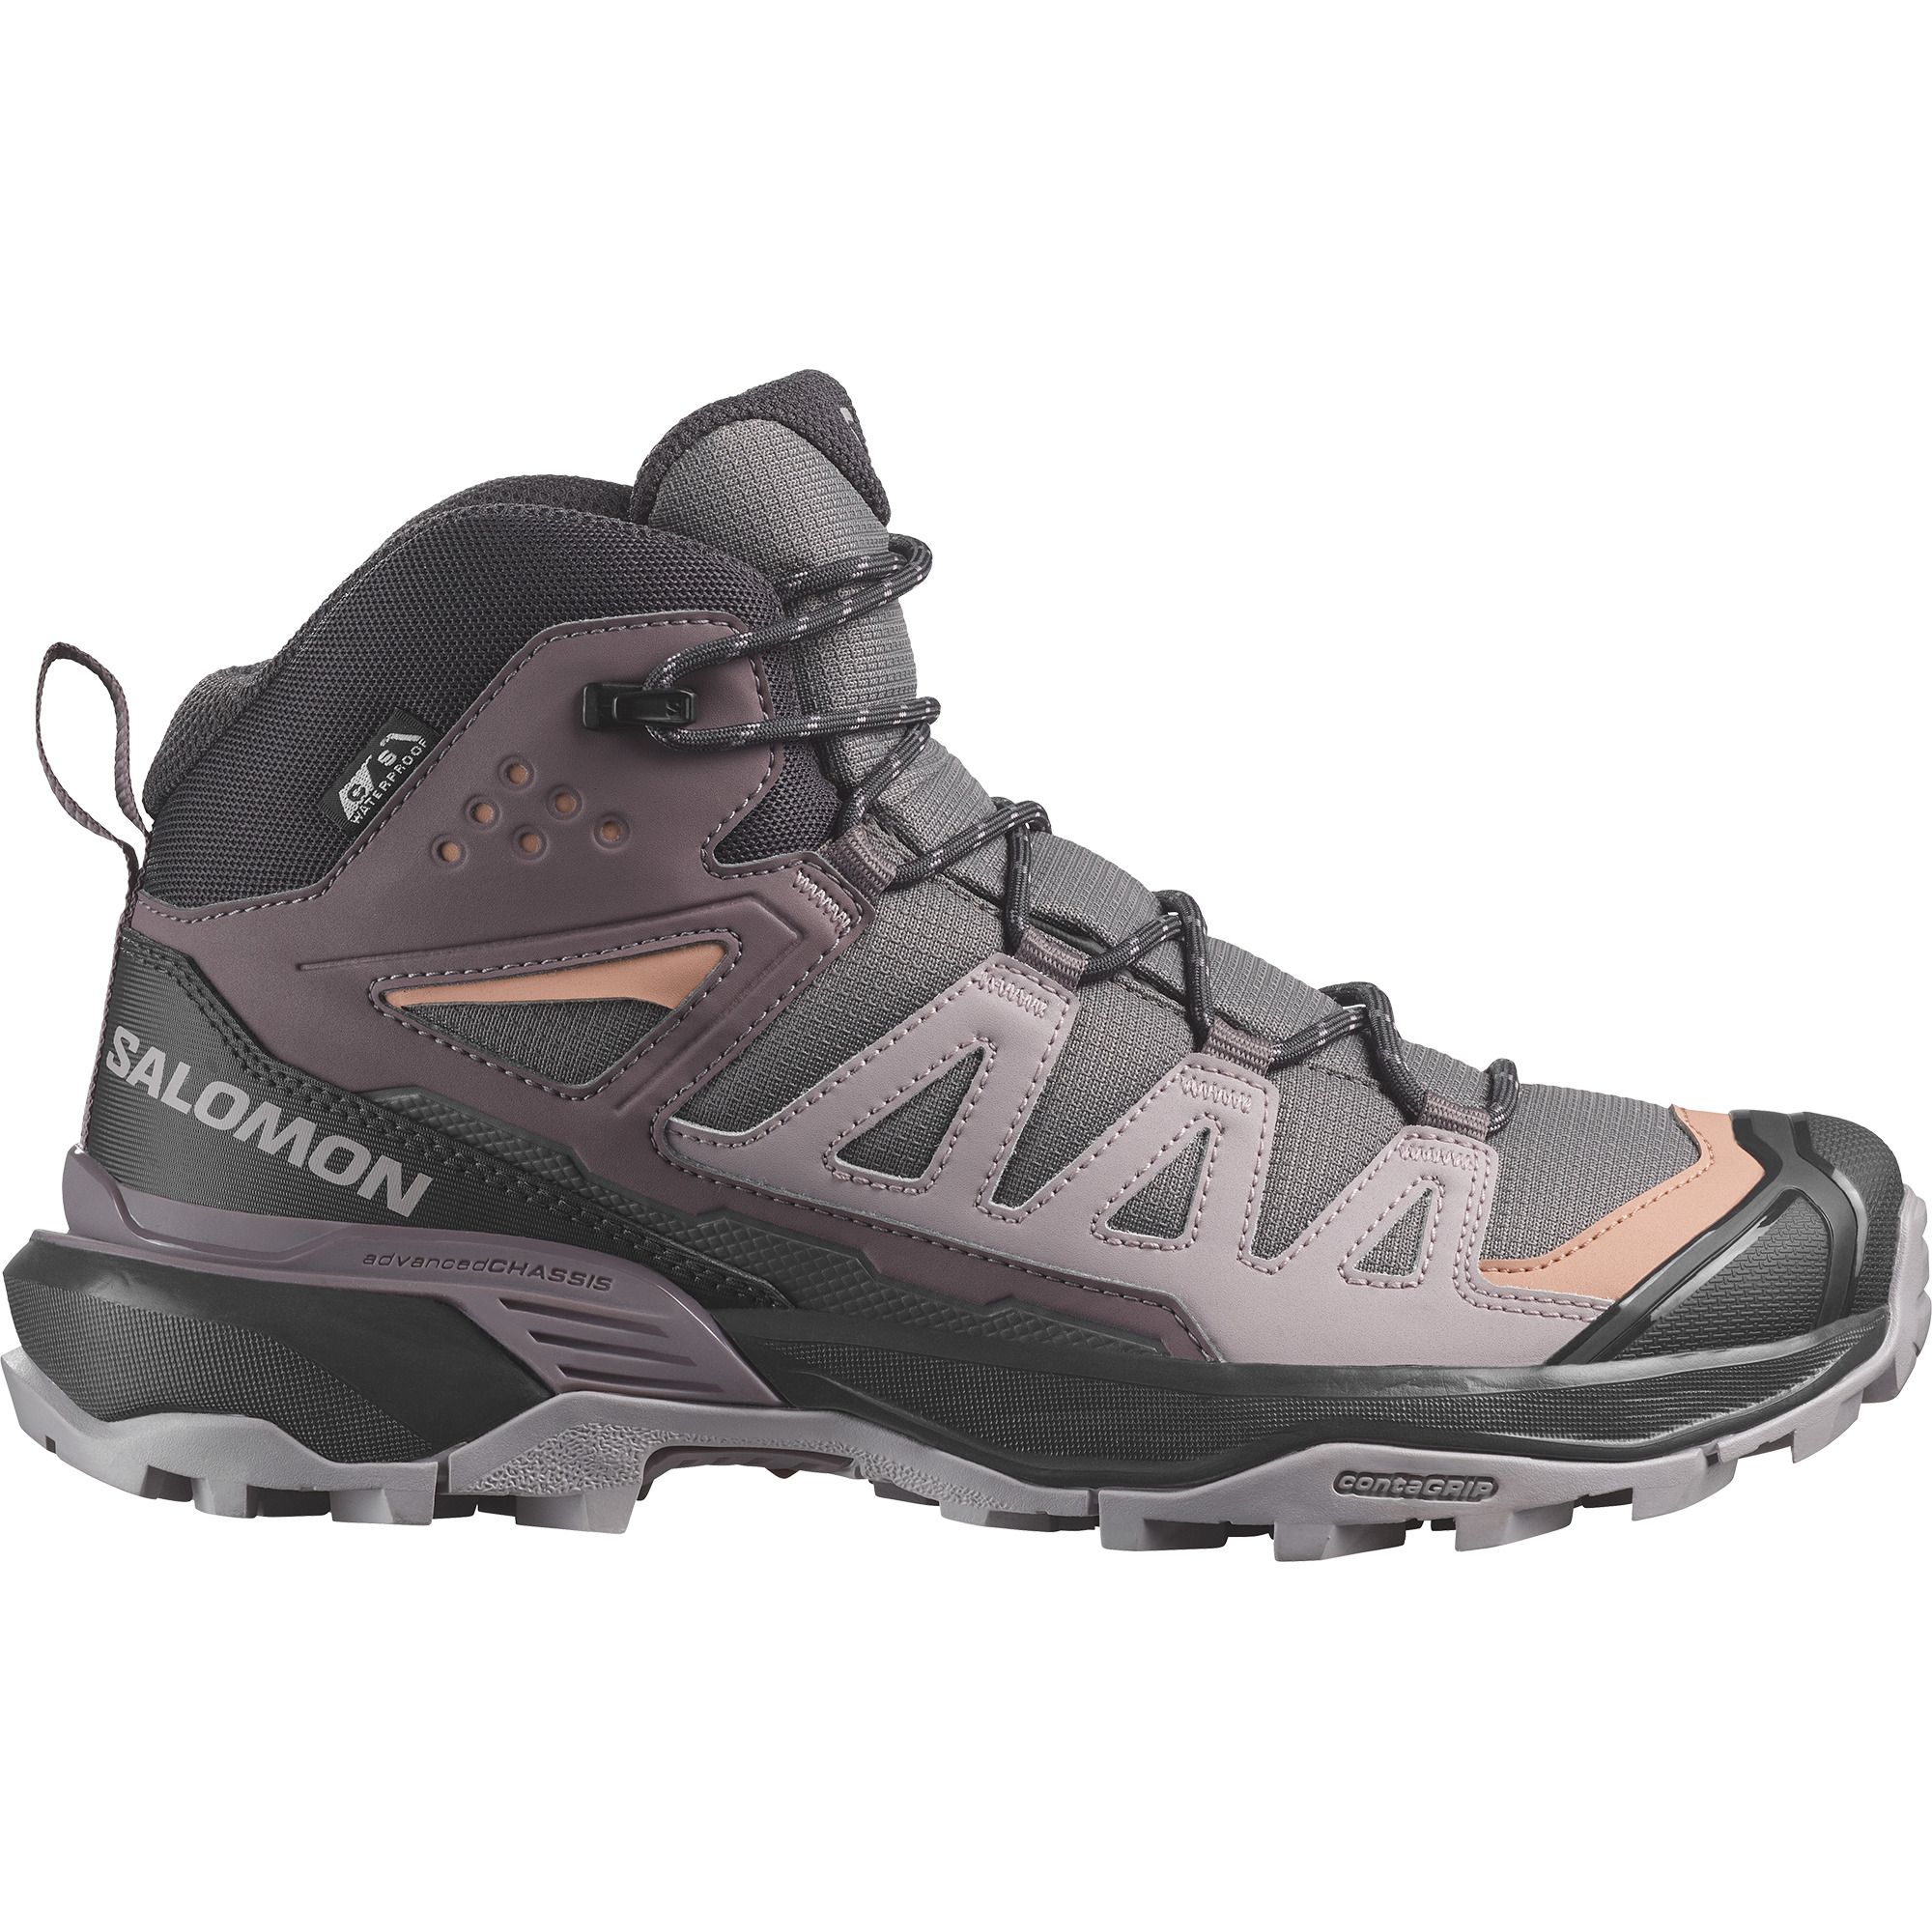 Image of Salomon Women's X ultra 360 Mid Cswp Hiking Shoes